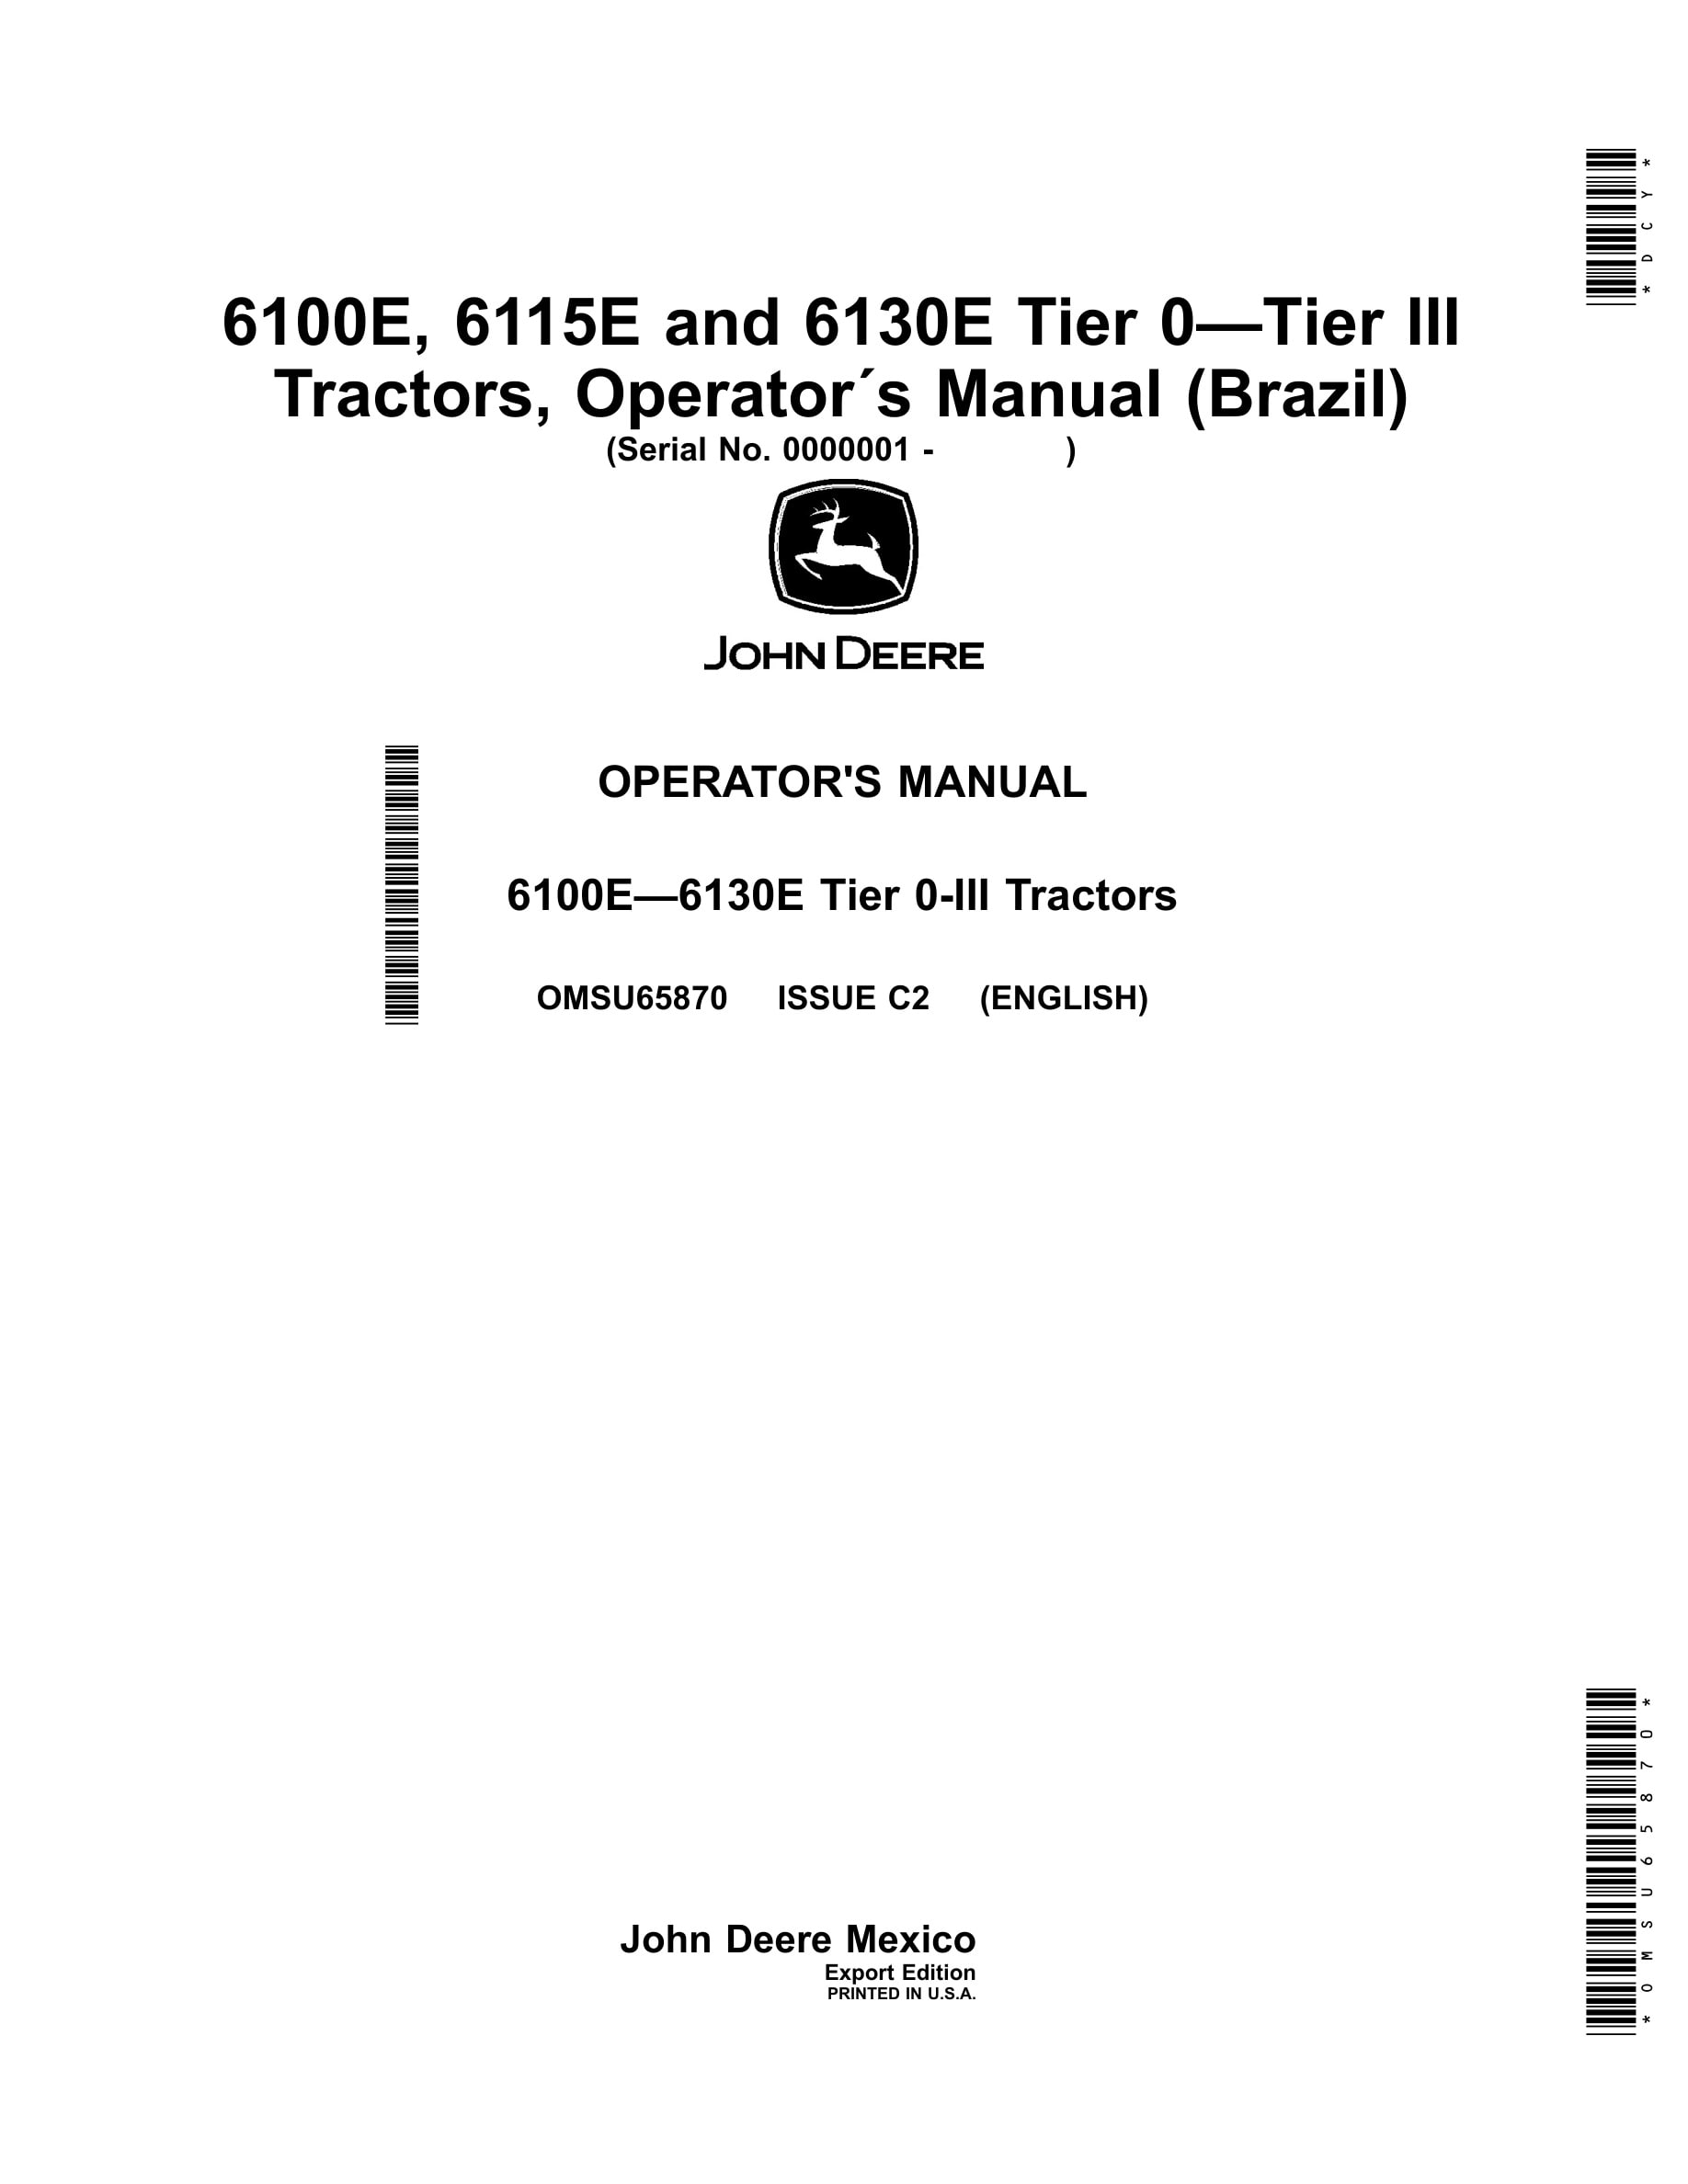 John Deere 6100e, 6115e And 6130e Tier 0-tier Iii Tractors Operator Manuals OMSU65870-1